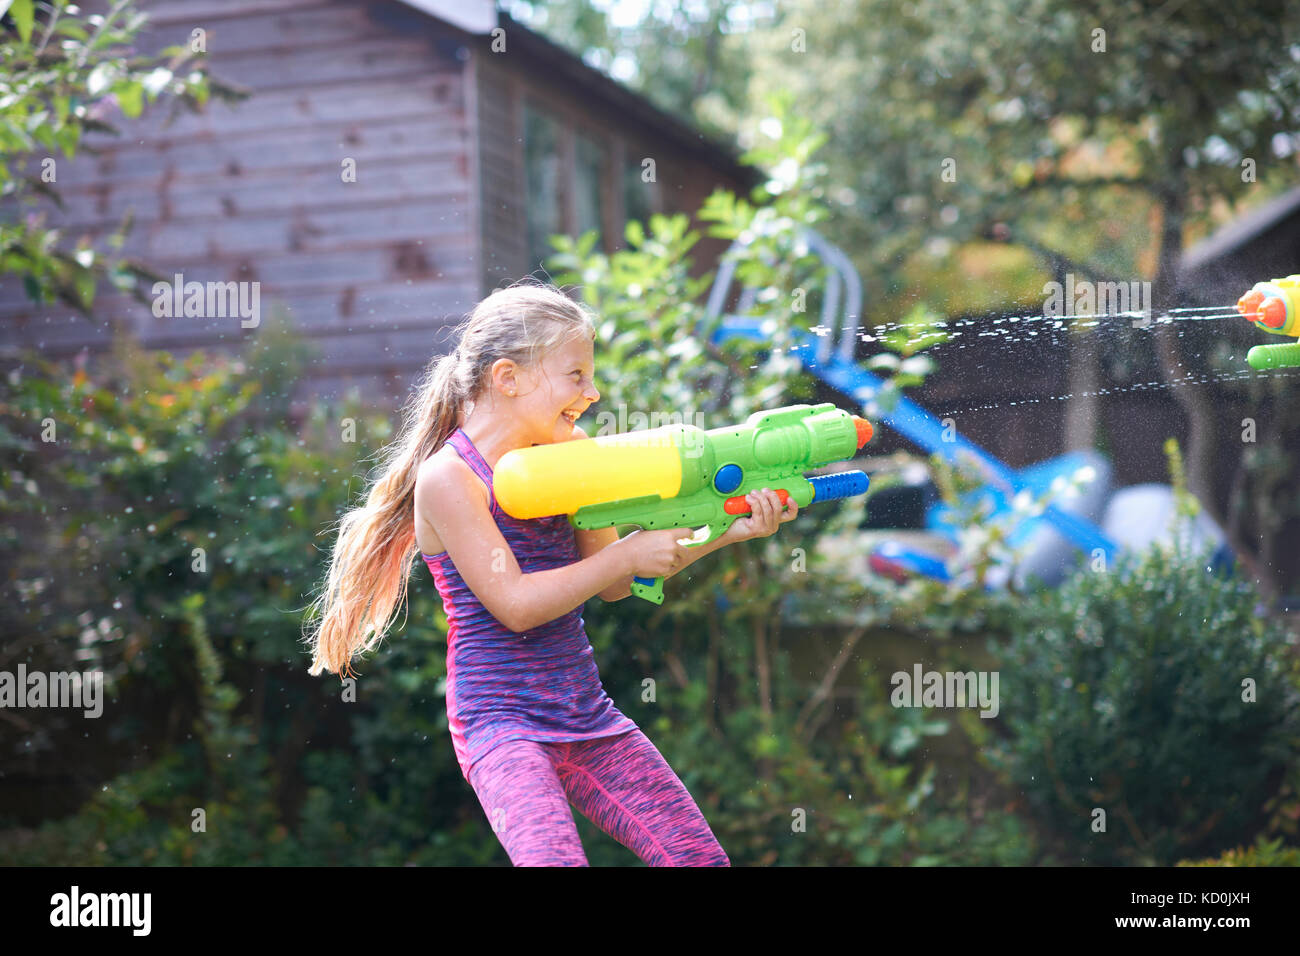 Girl squirting water gun in garden Stock Photo